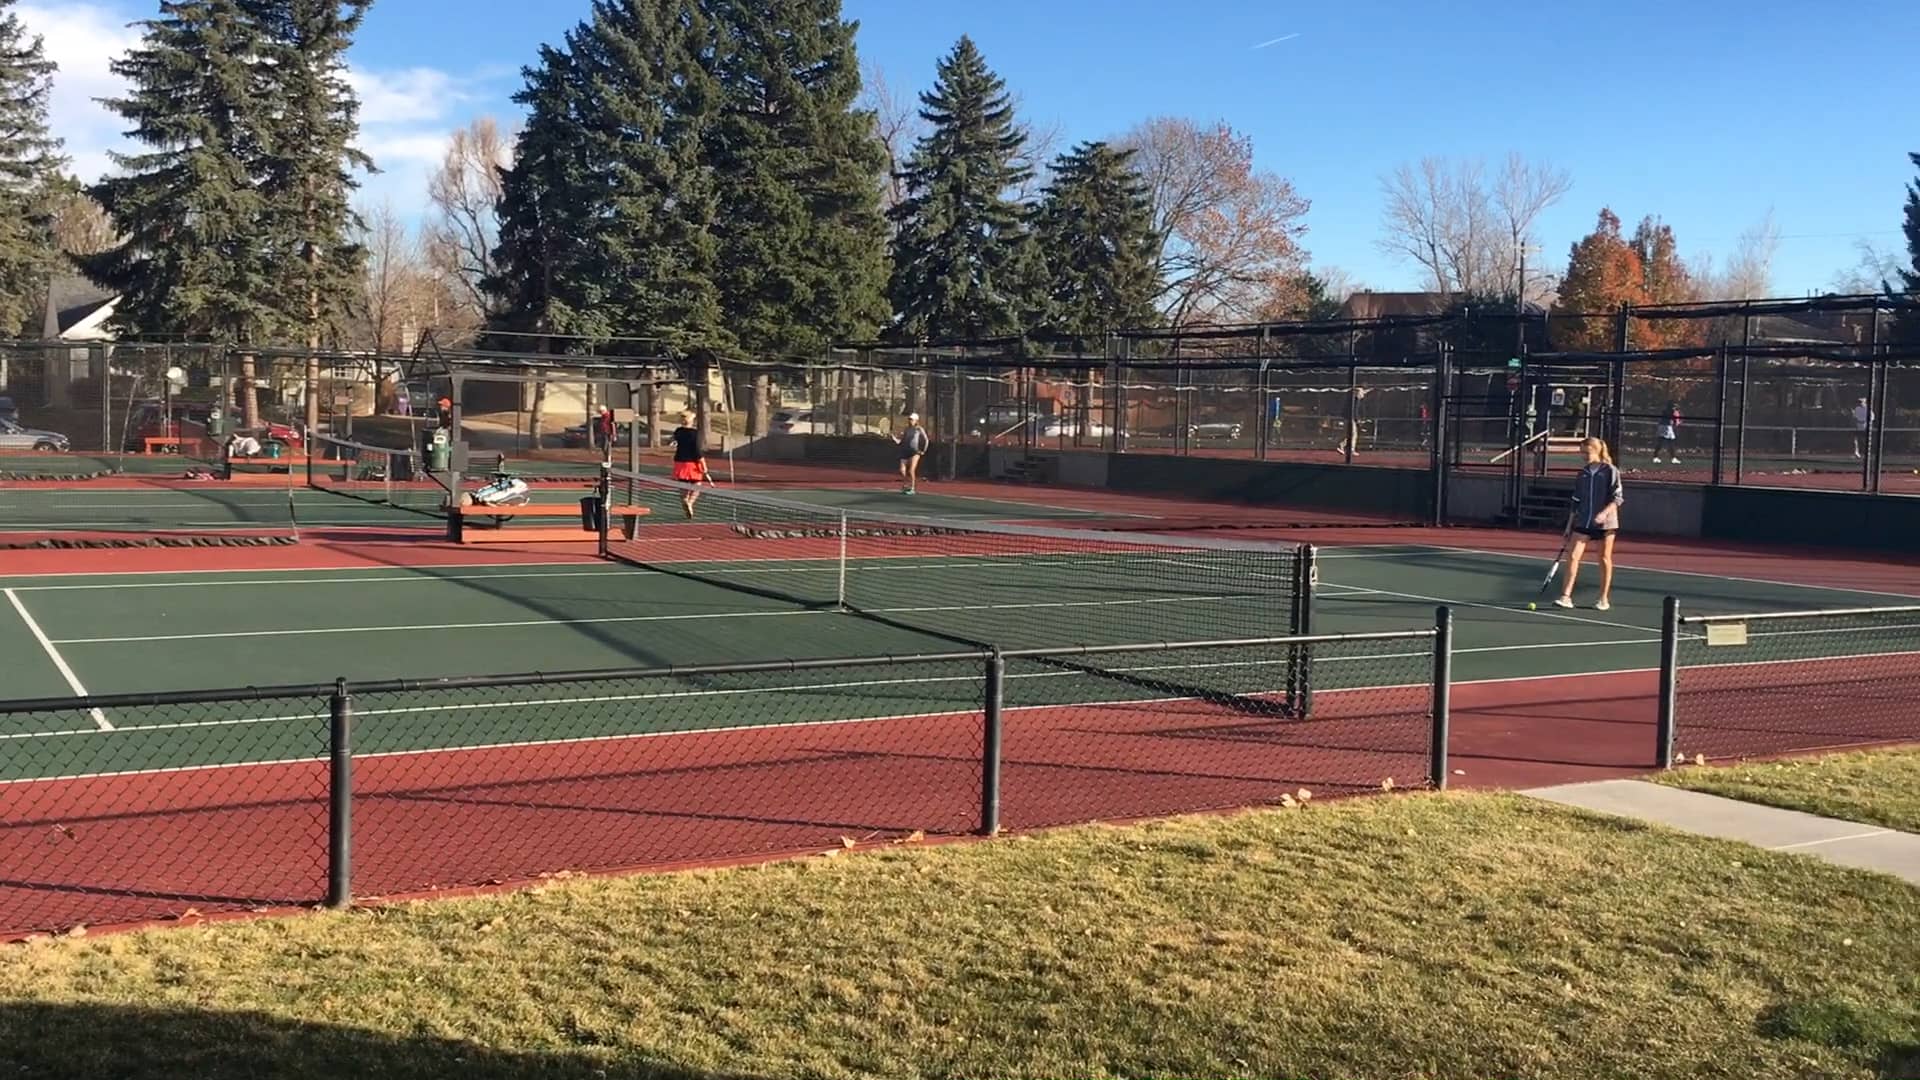 Denver Tennis Club Introduction on Vimeo